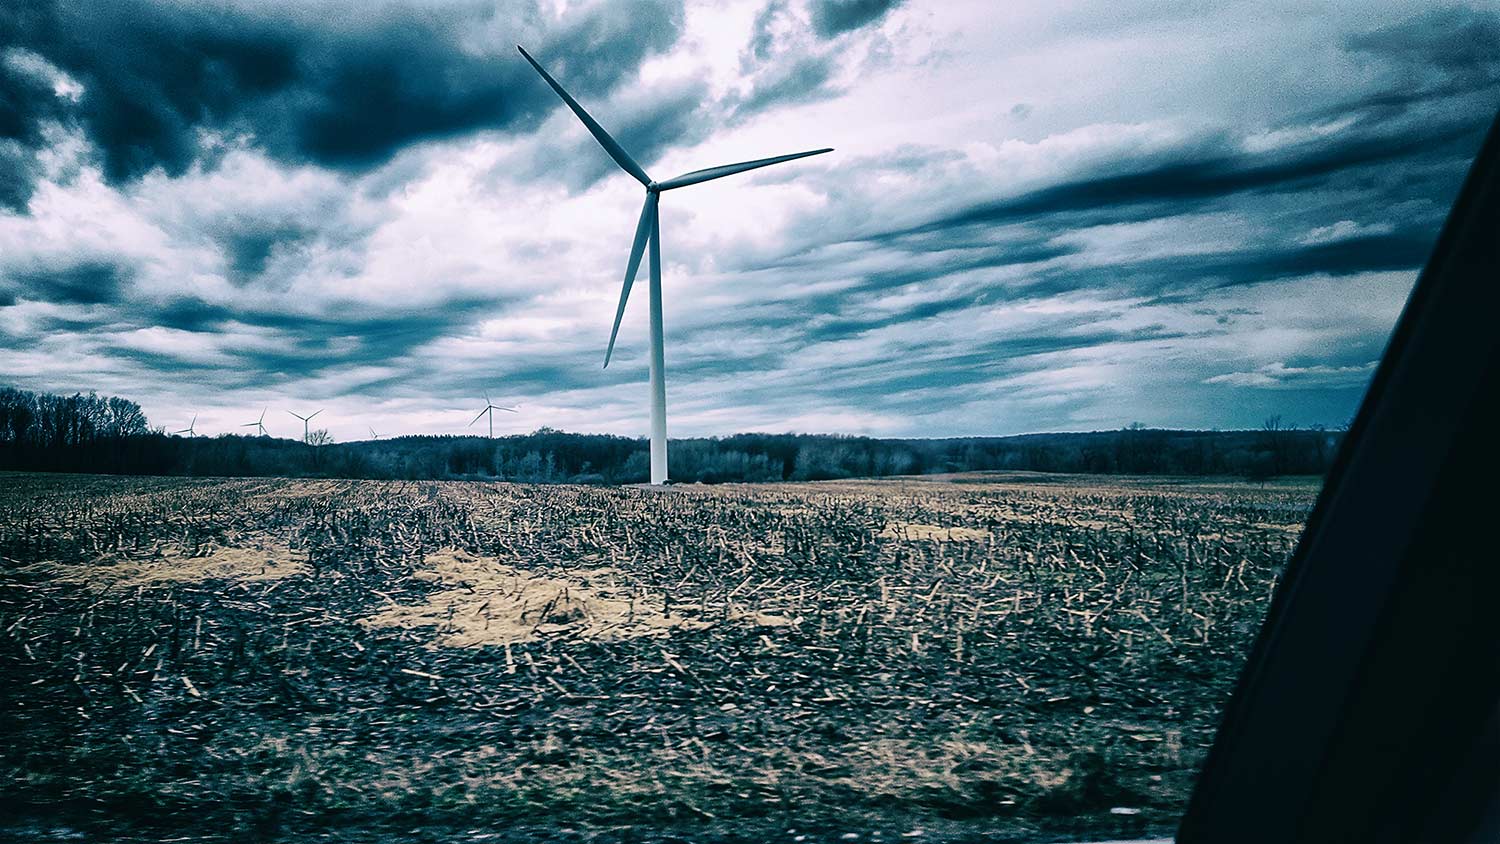 wind farm ©2017 by bret wills